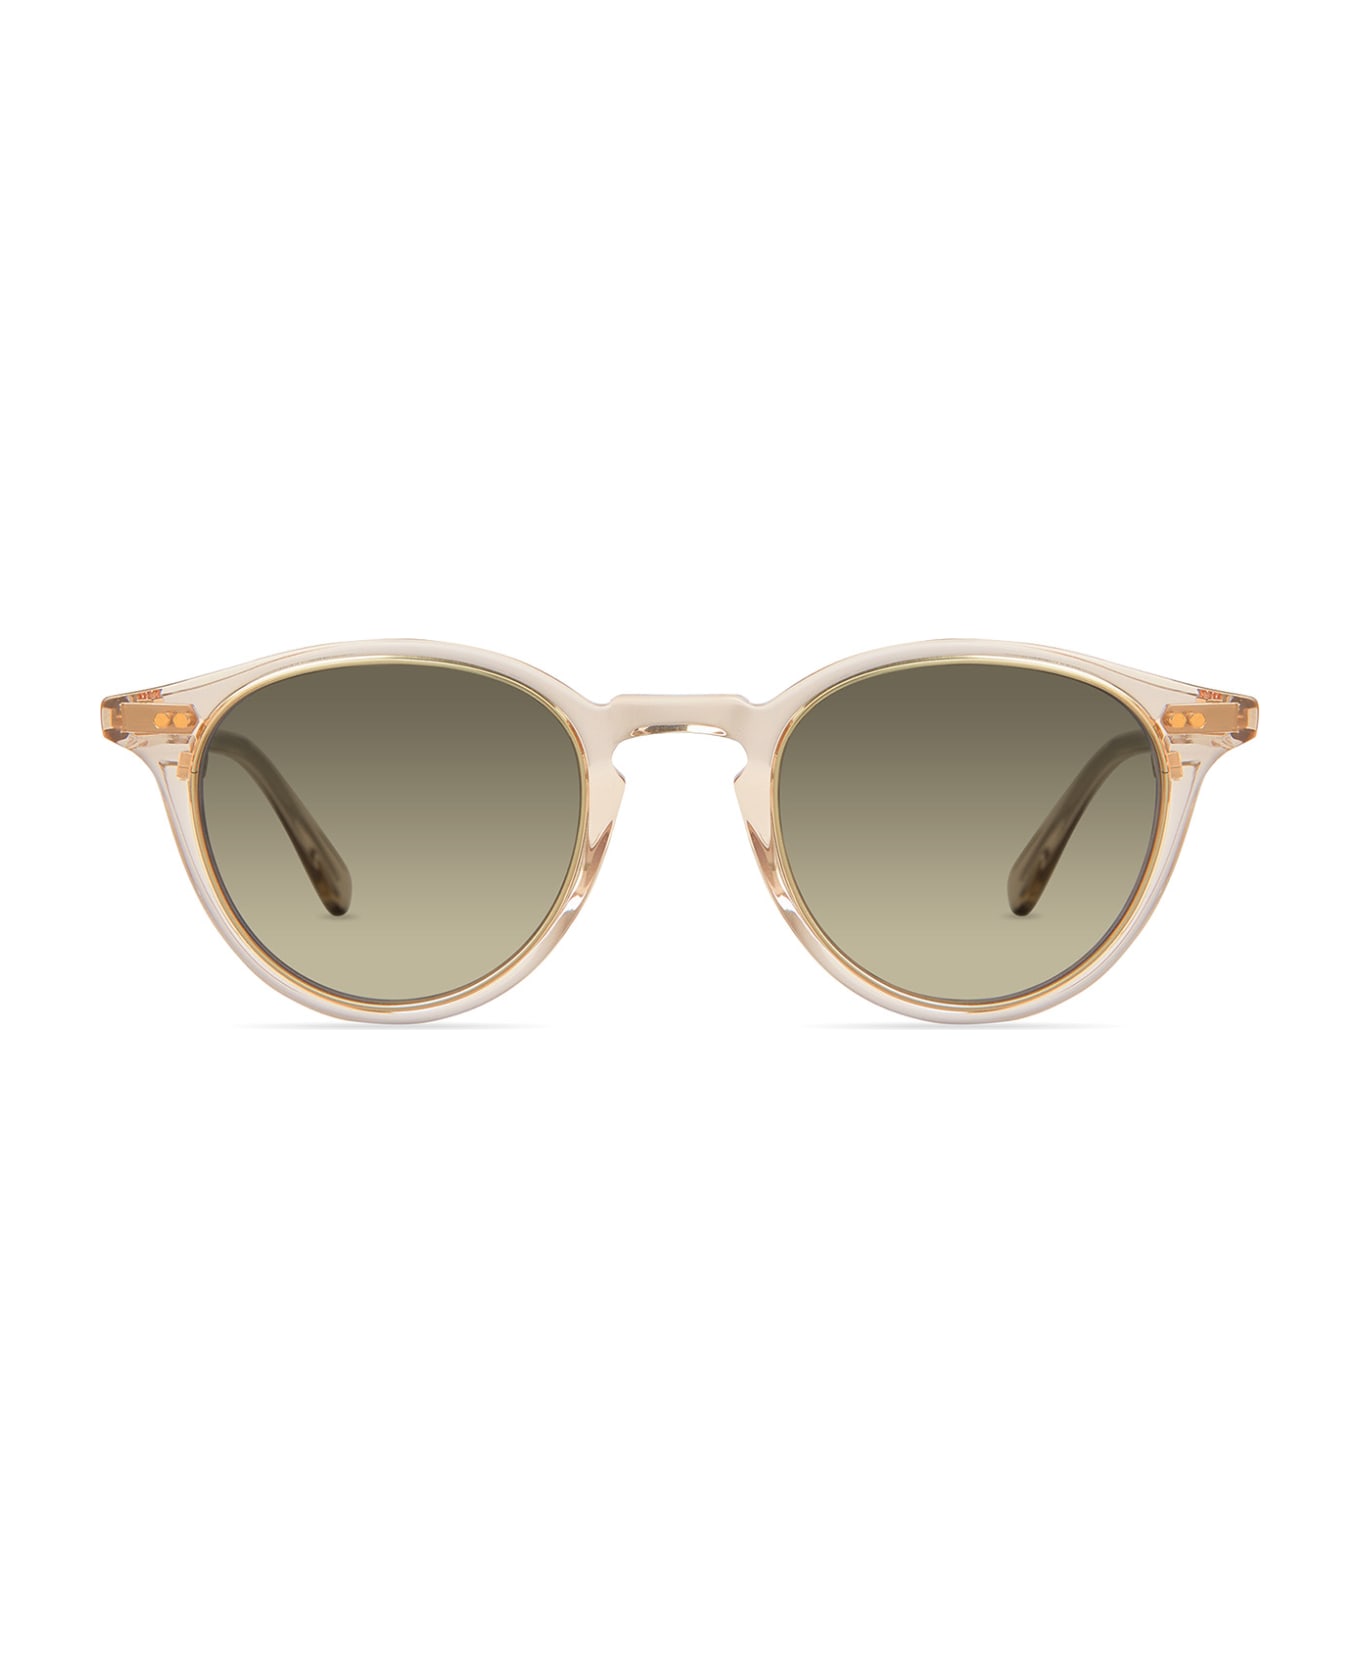 Mr. Leight Marmont Ii S Dune-white Gold Sunglasses - Dune-White Gold サングラス